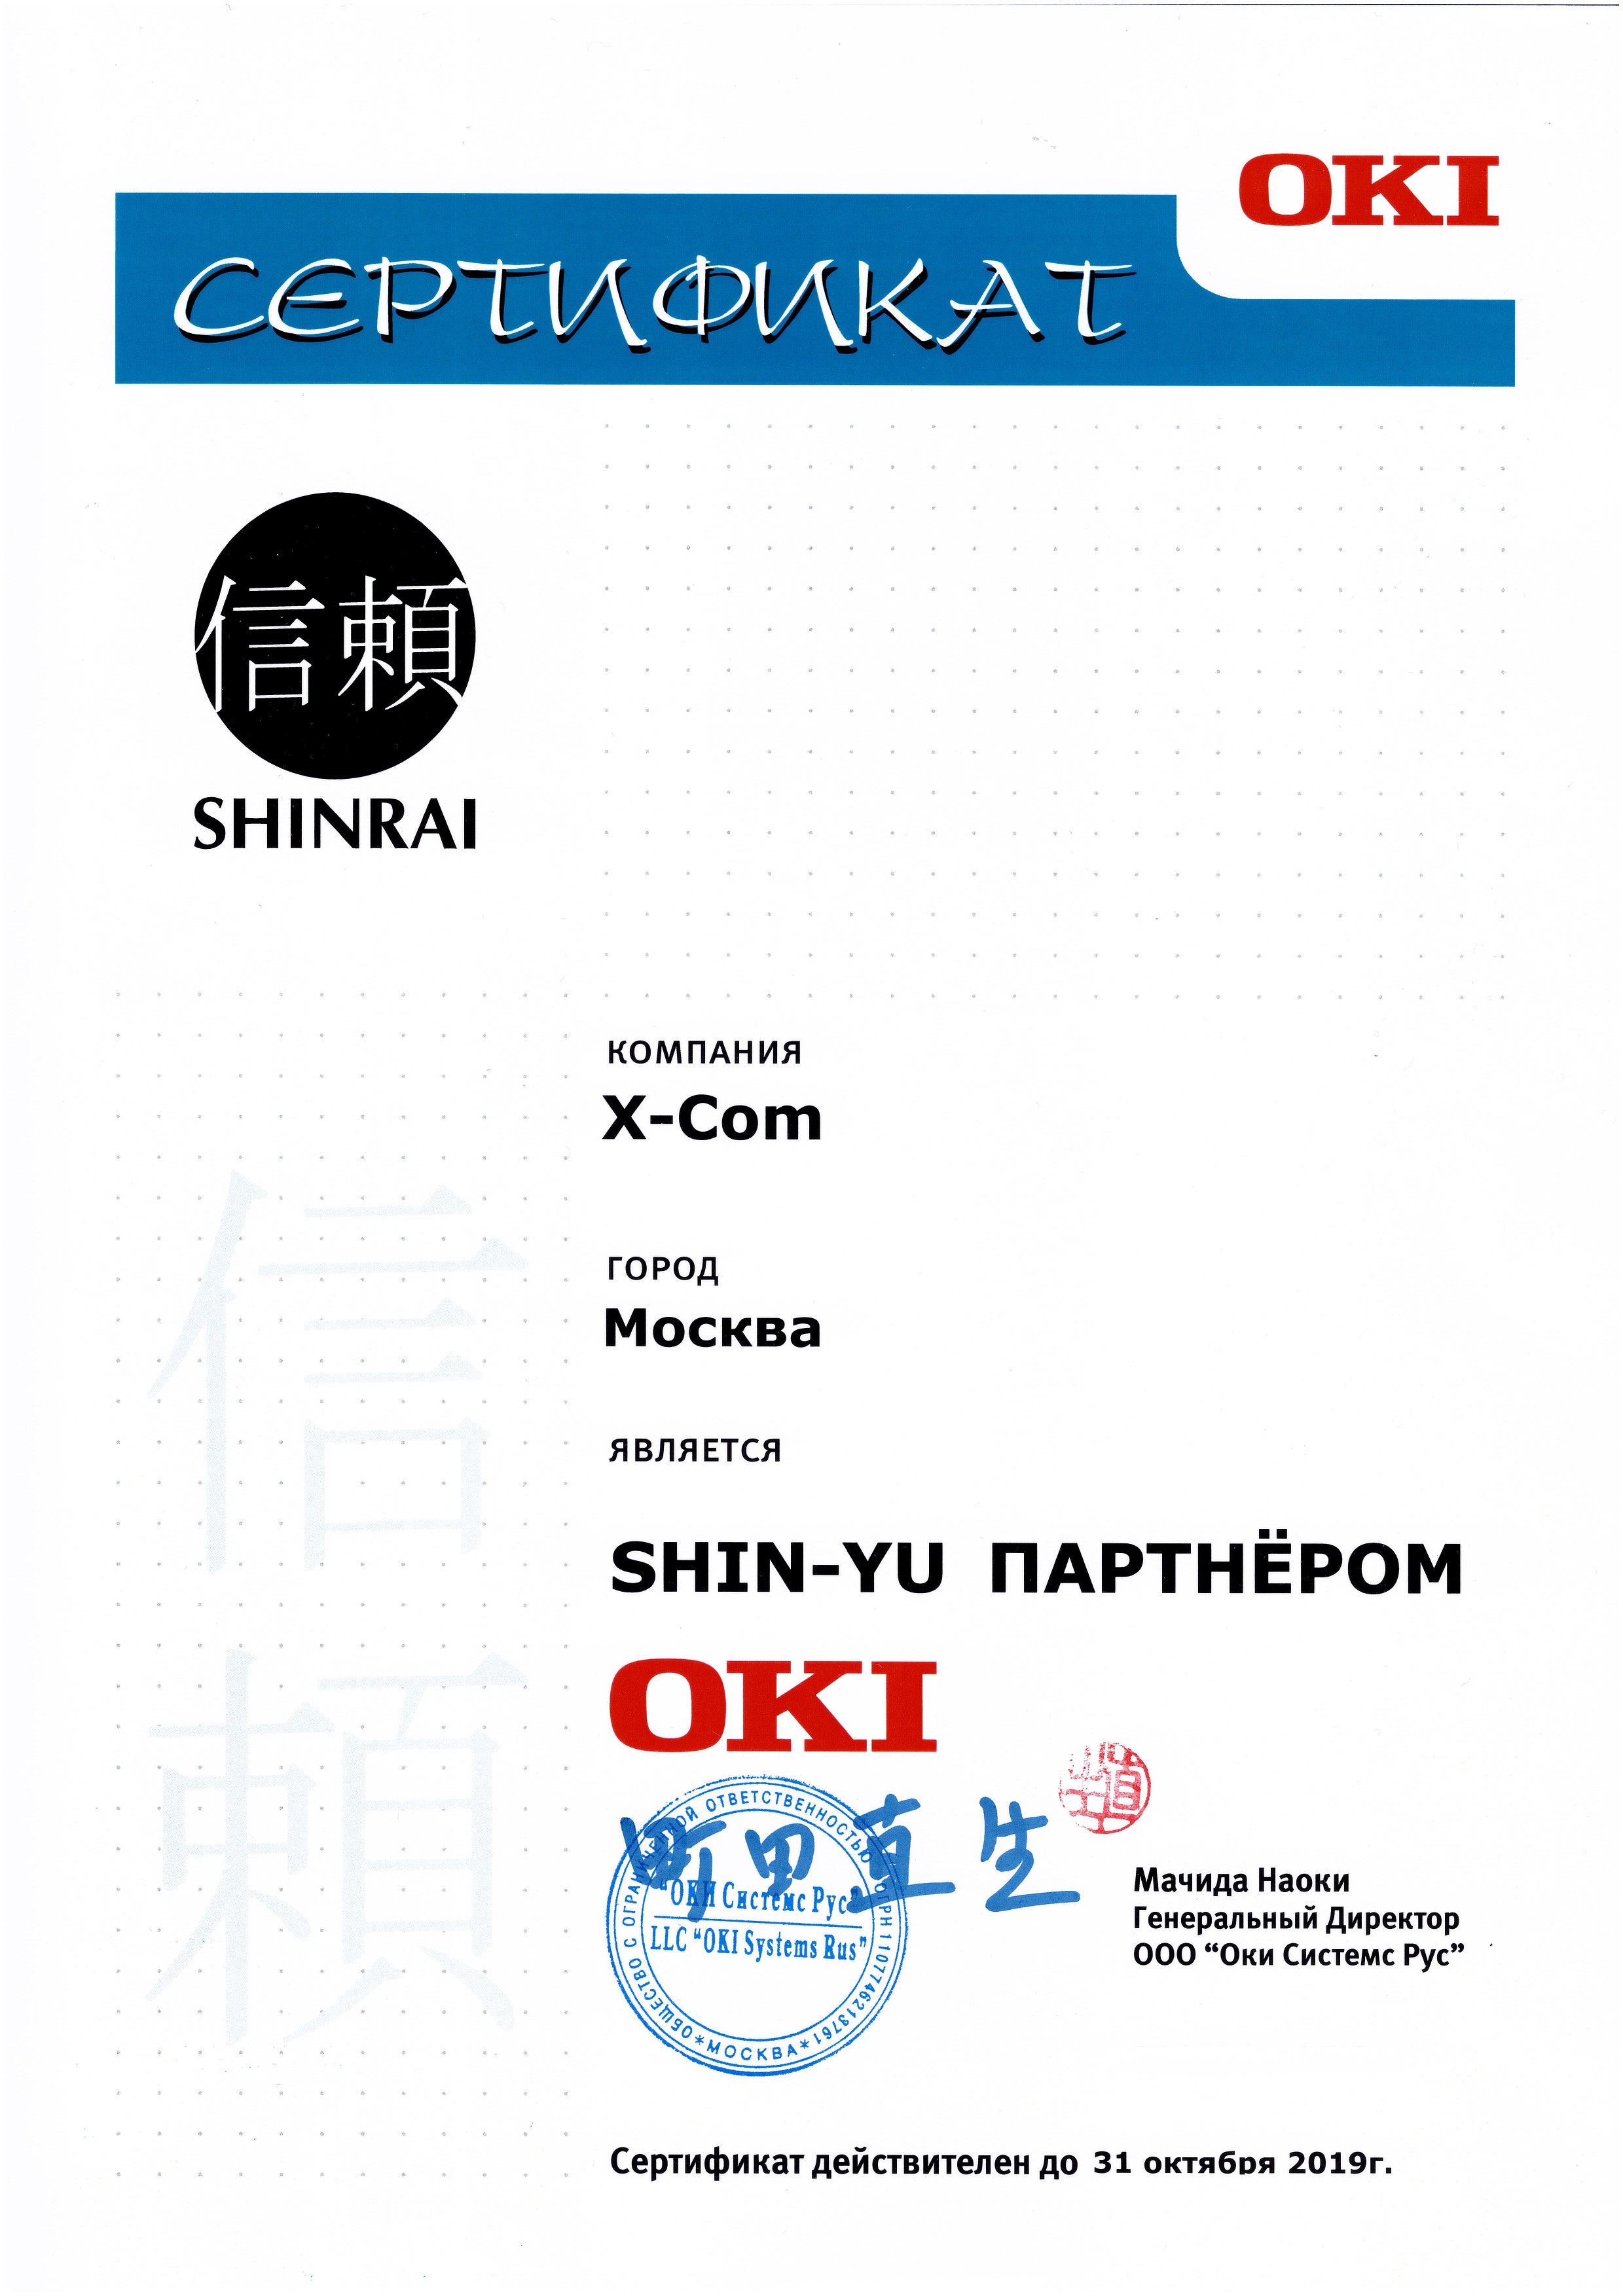 X-Com подтвердила статус Shin-Yu партнера OKI